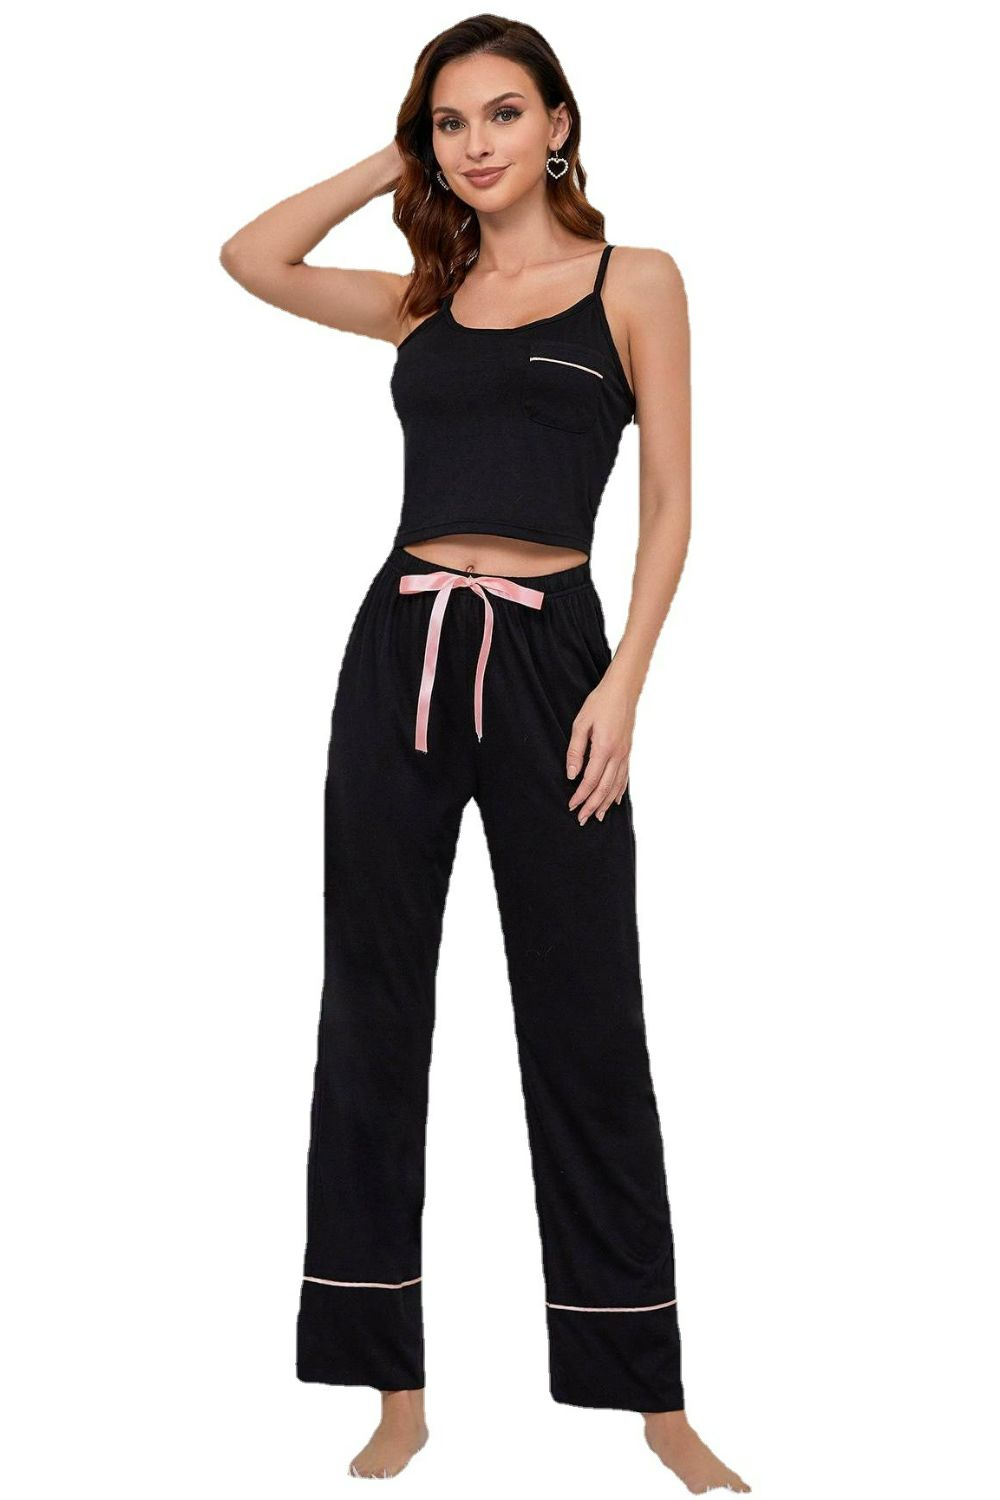 Contrast Trim Cropped Cami and Pants Loungewear Set - Shop Shea Rock